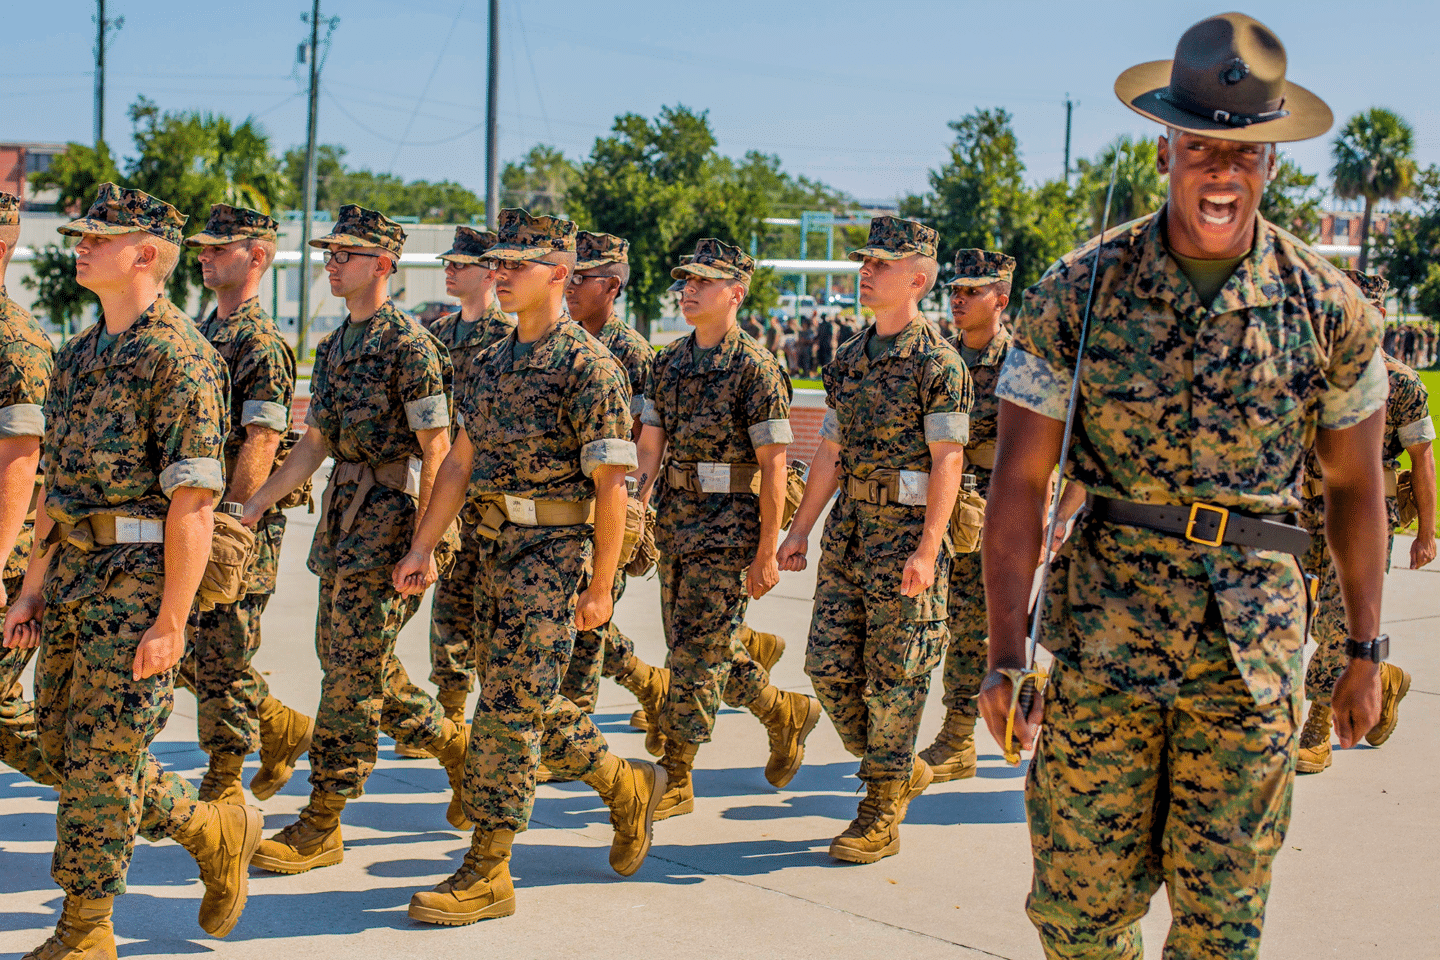 How Hard Is Marine Boot Camp? PostureInfoHub